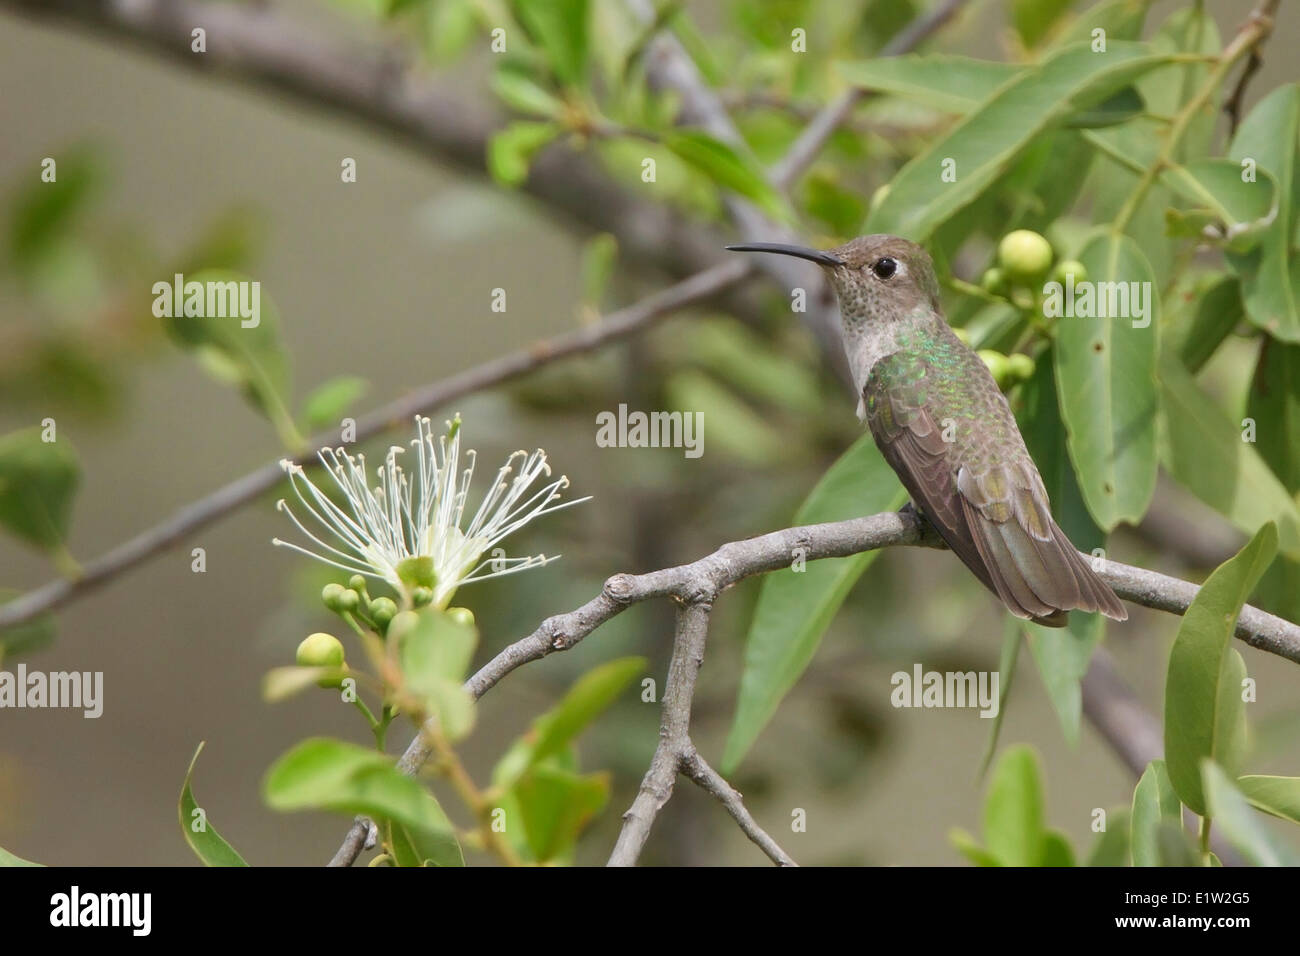 Tumbes Hummingbird (Leucippus baeri) perched on a branch in Peru. Stock Photo